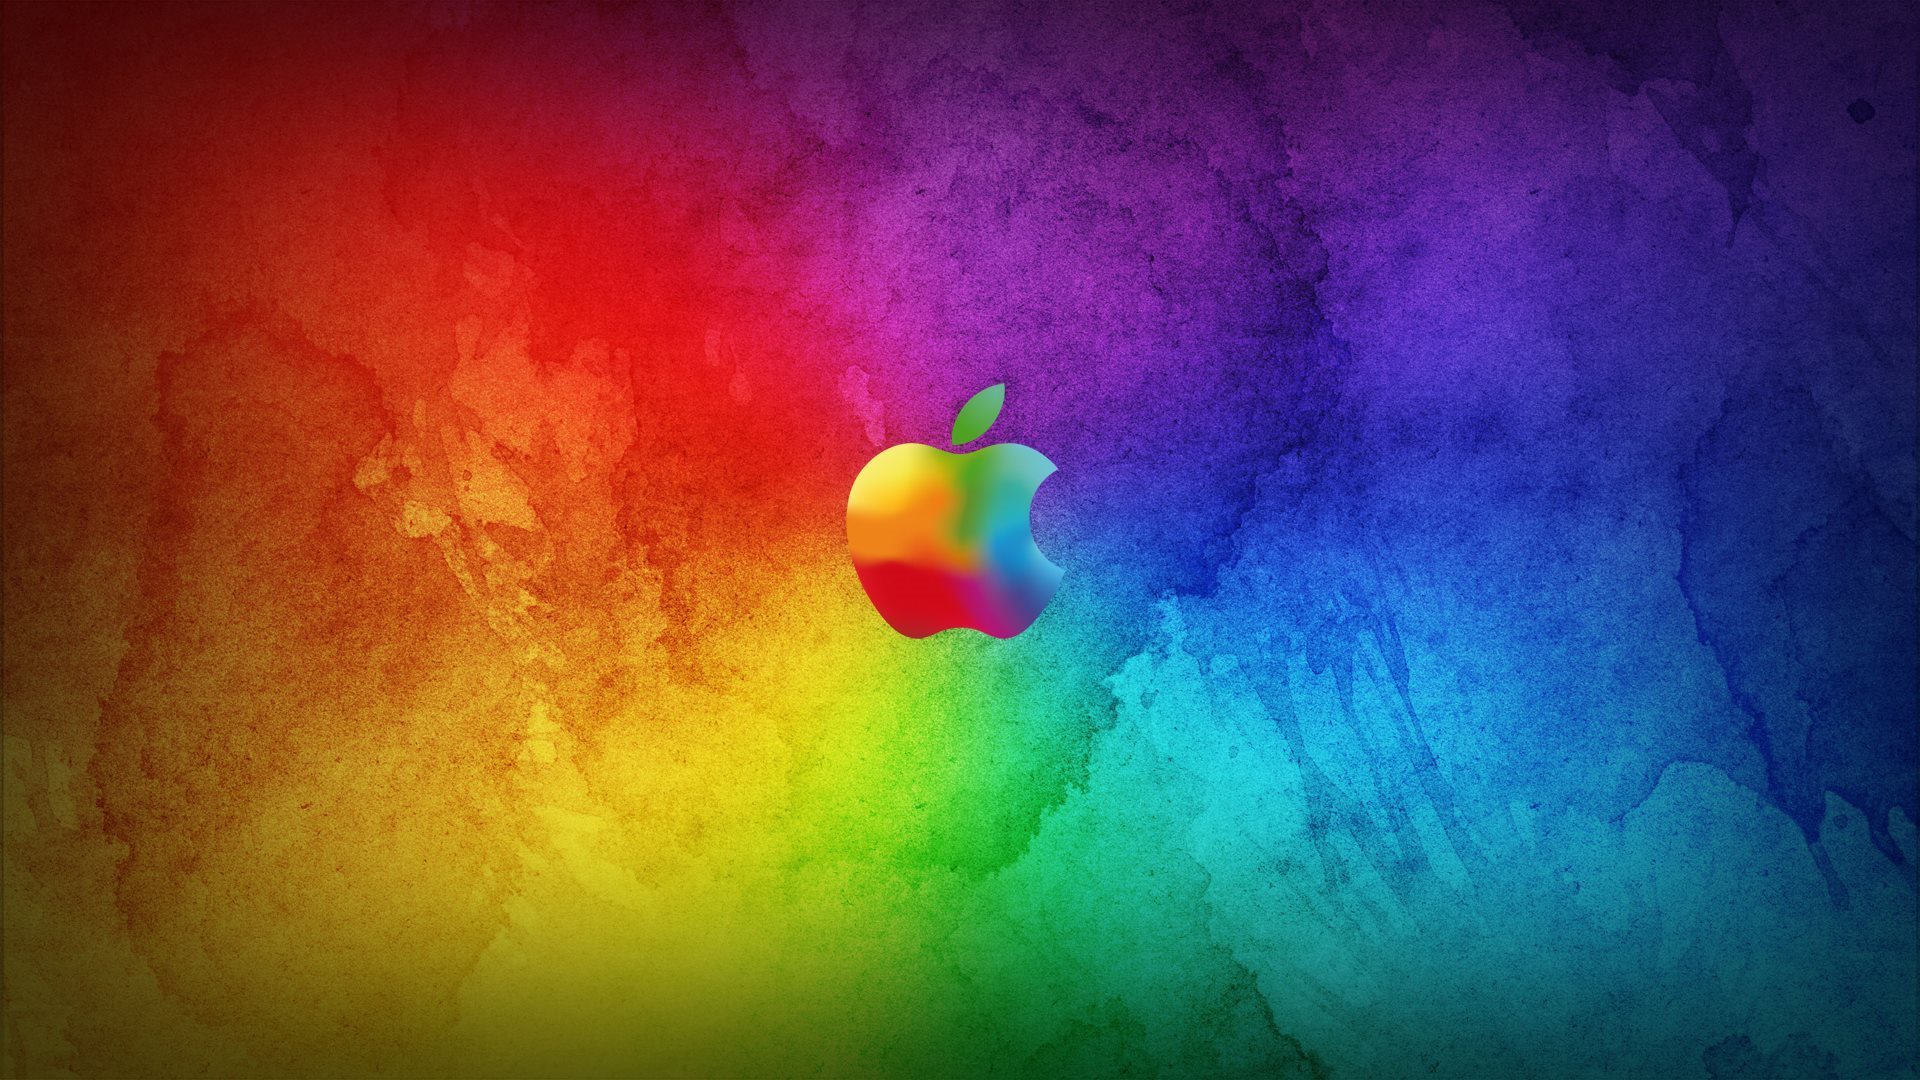  desktop wallpaper download amazing colorful apple logo wallpaper in hd